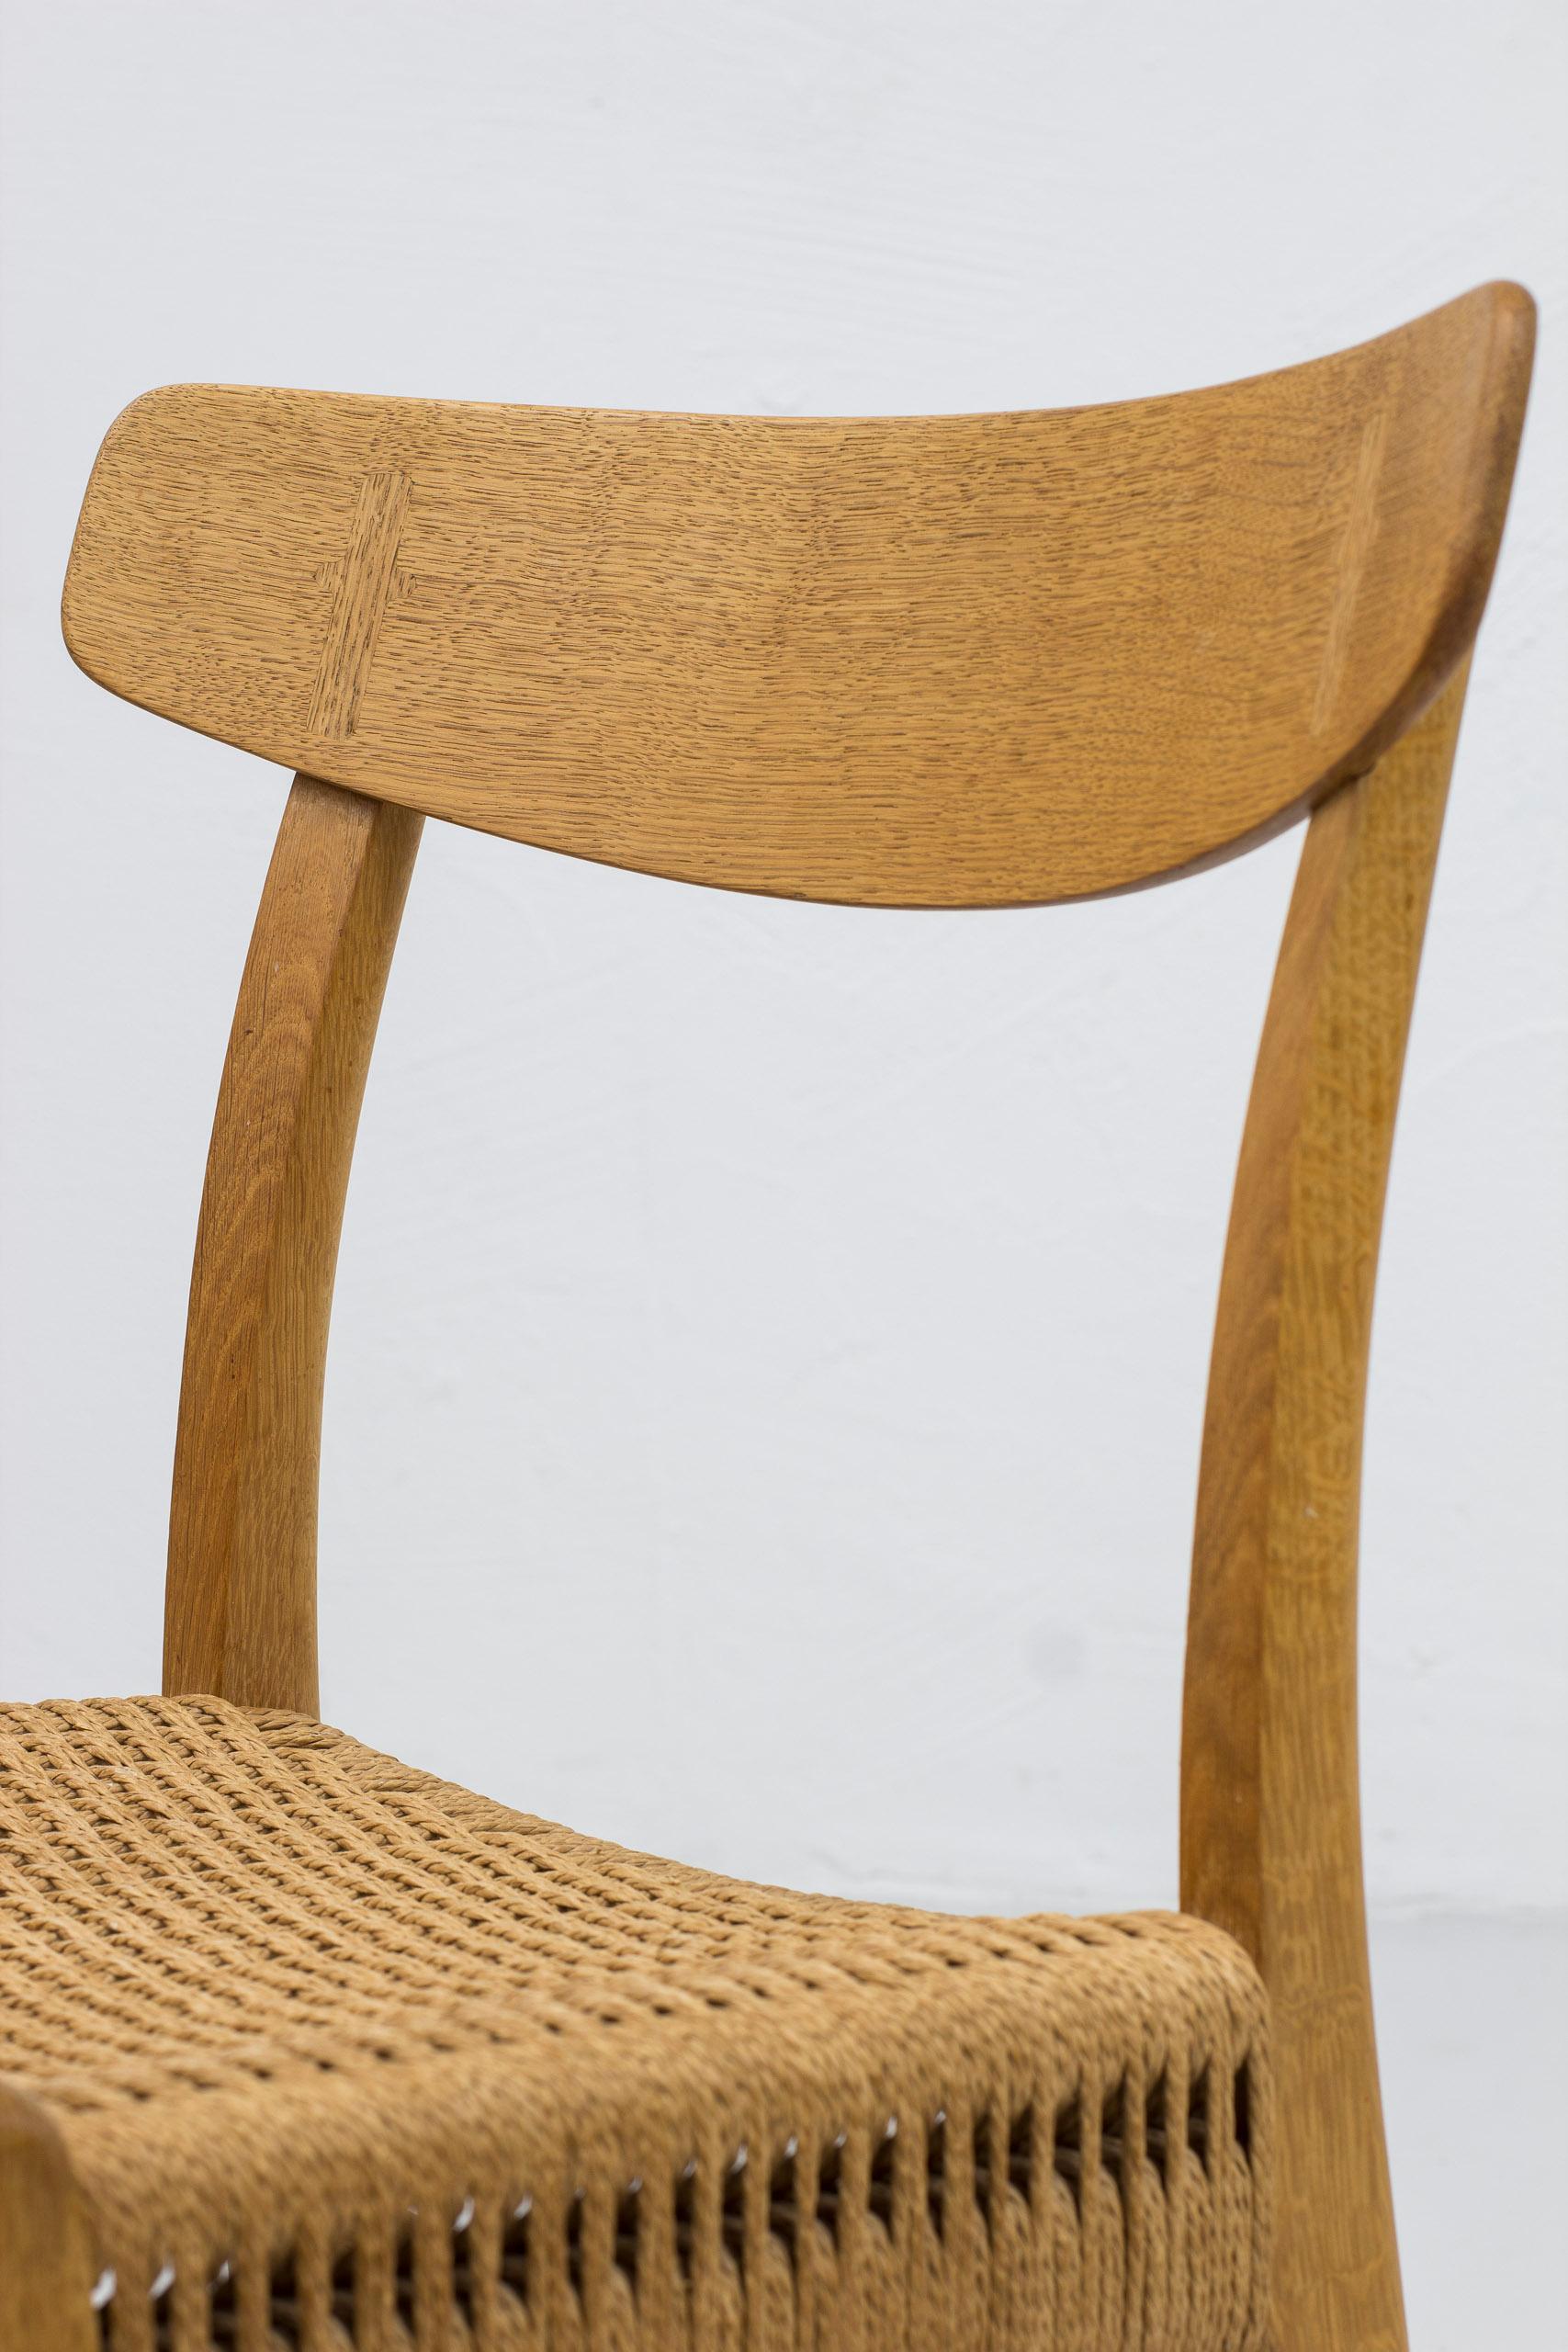 CH23 dining chair in oak and rope by Hans J. Wegner, Carl Hansen & Søn 2